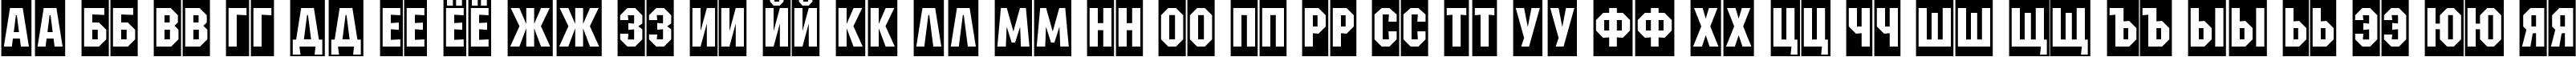 Пример написания русского алфавита шрифтом a_MachinaNovaCm